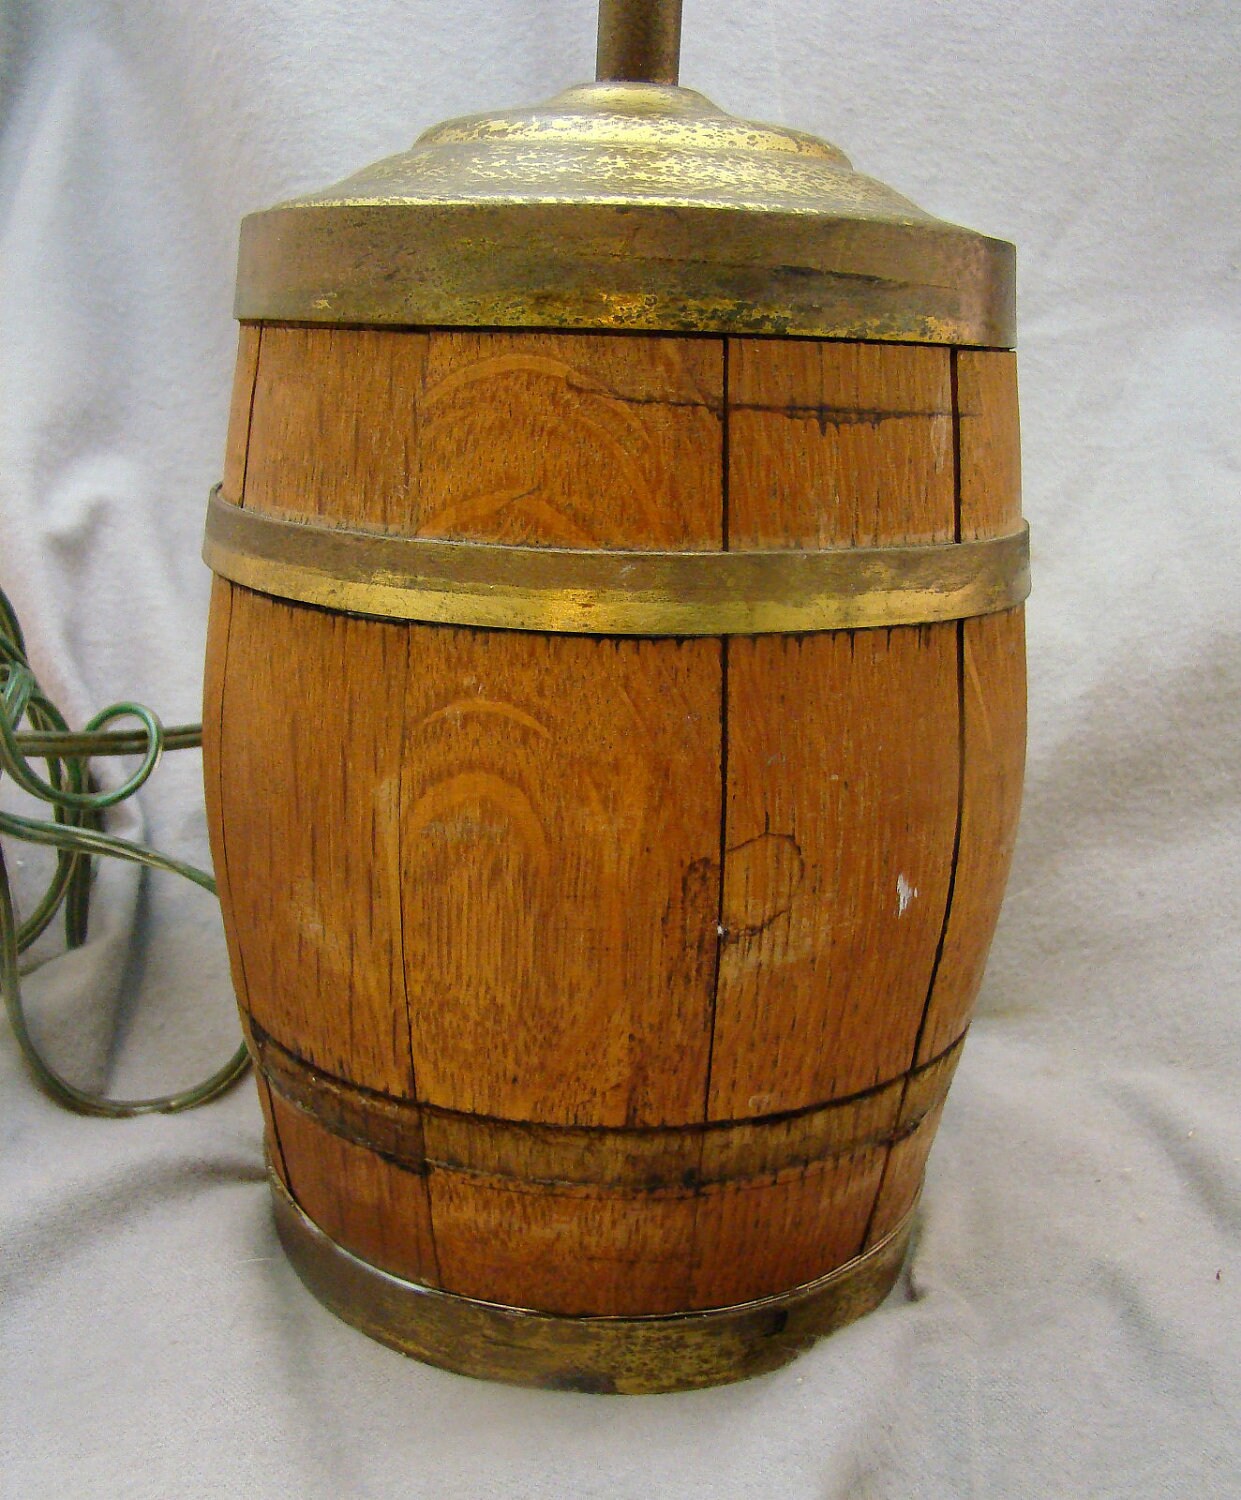 Wooden Keg